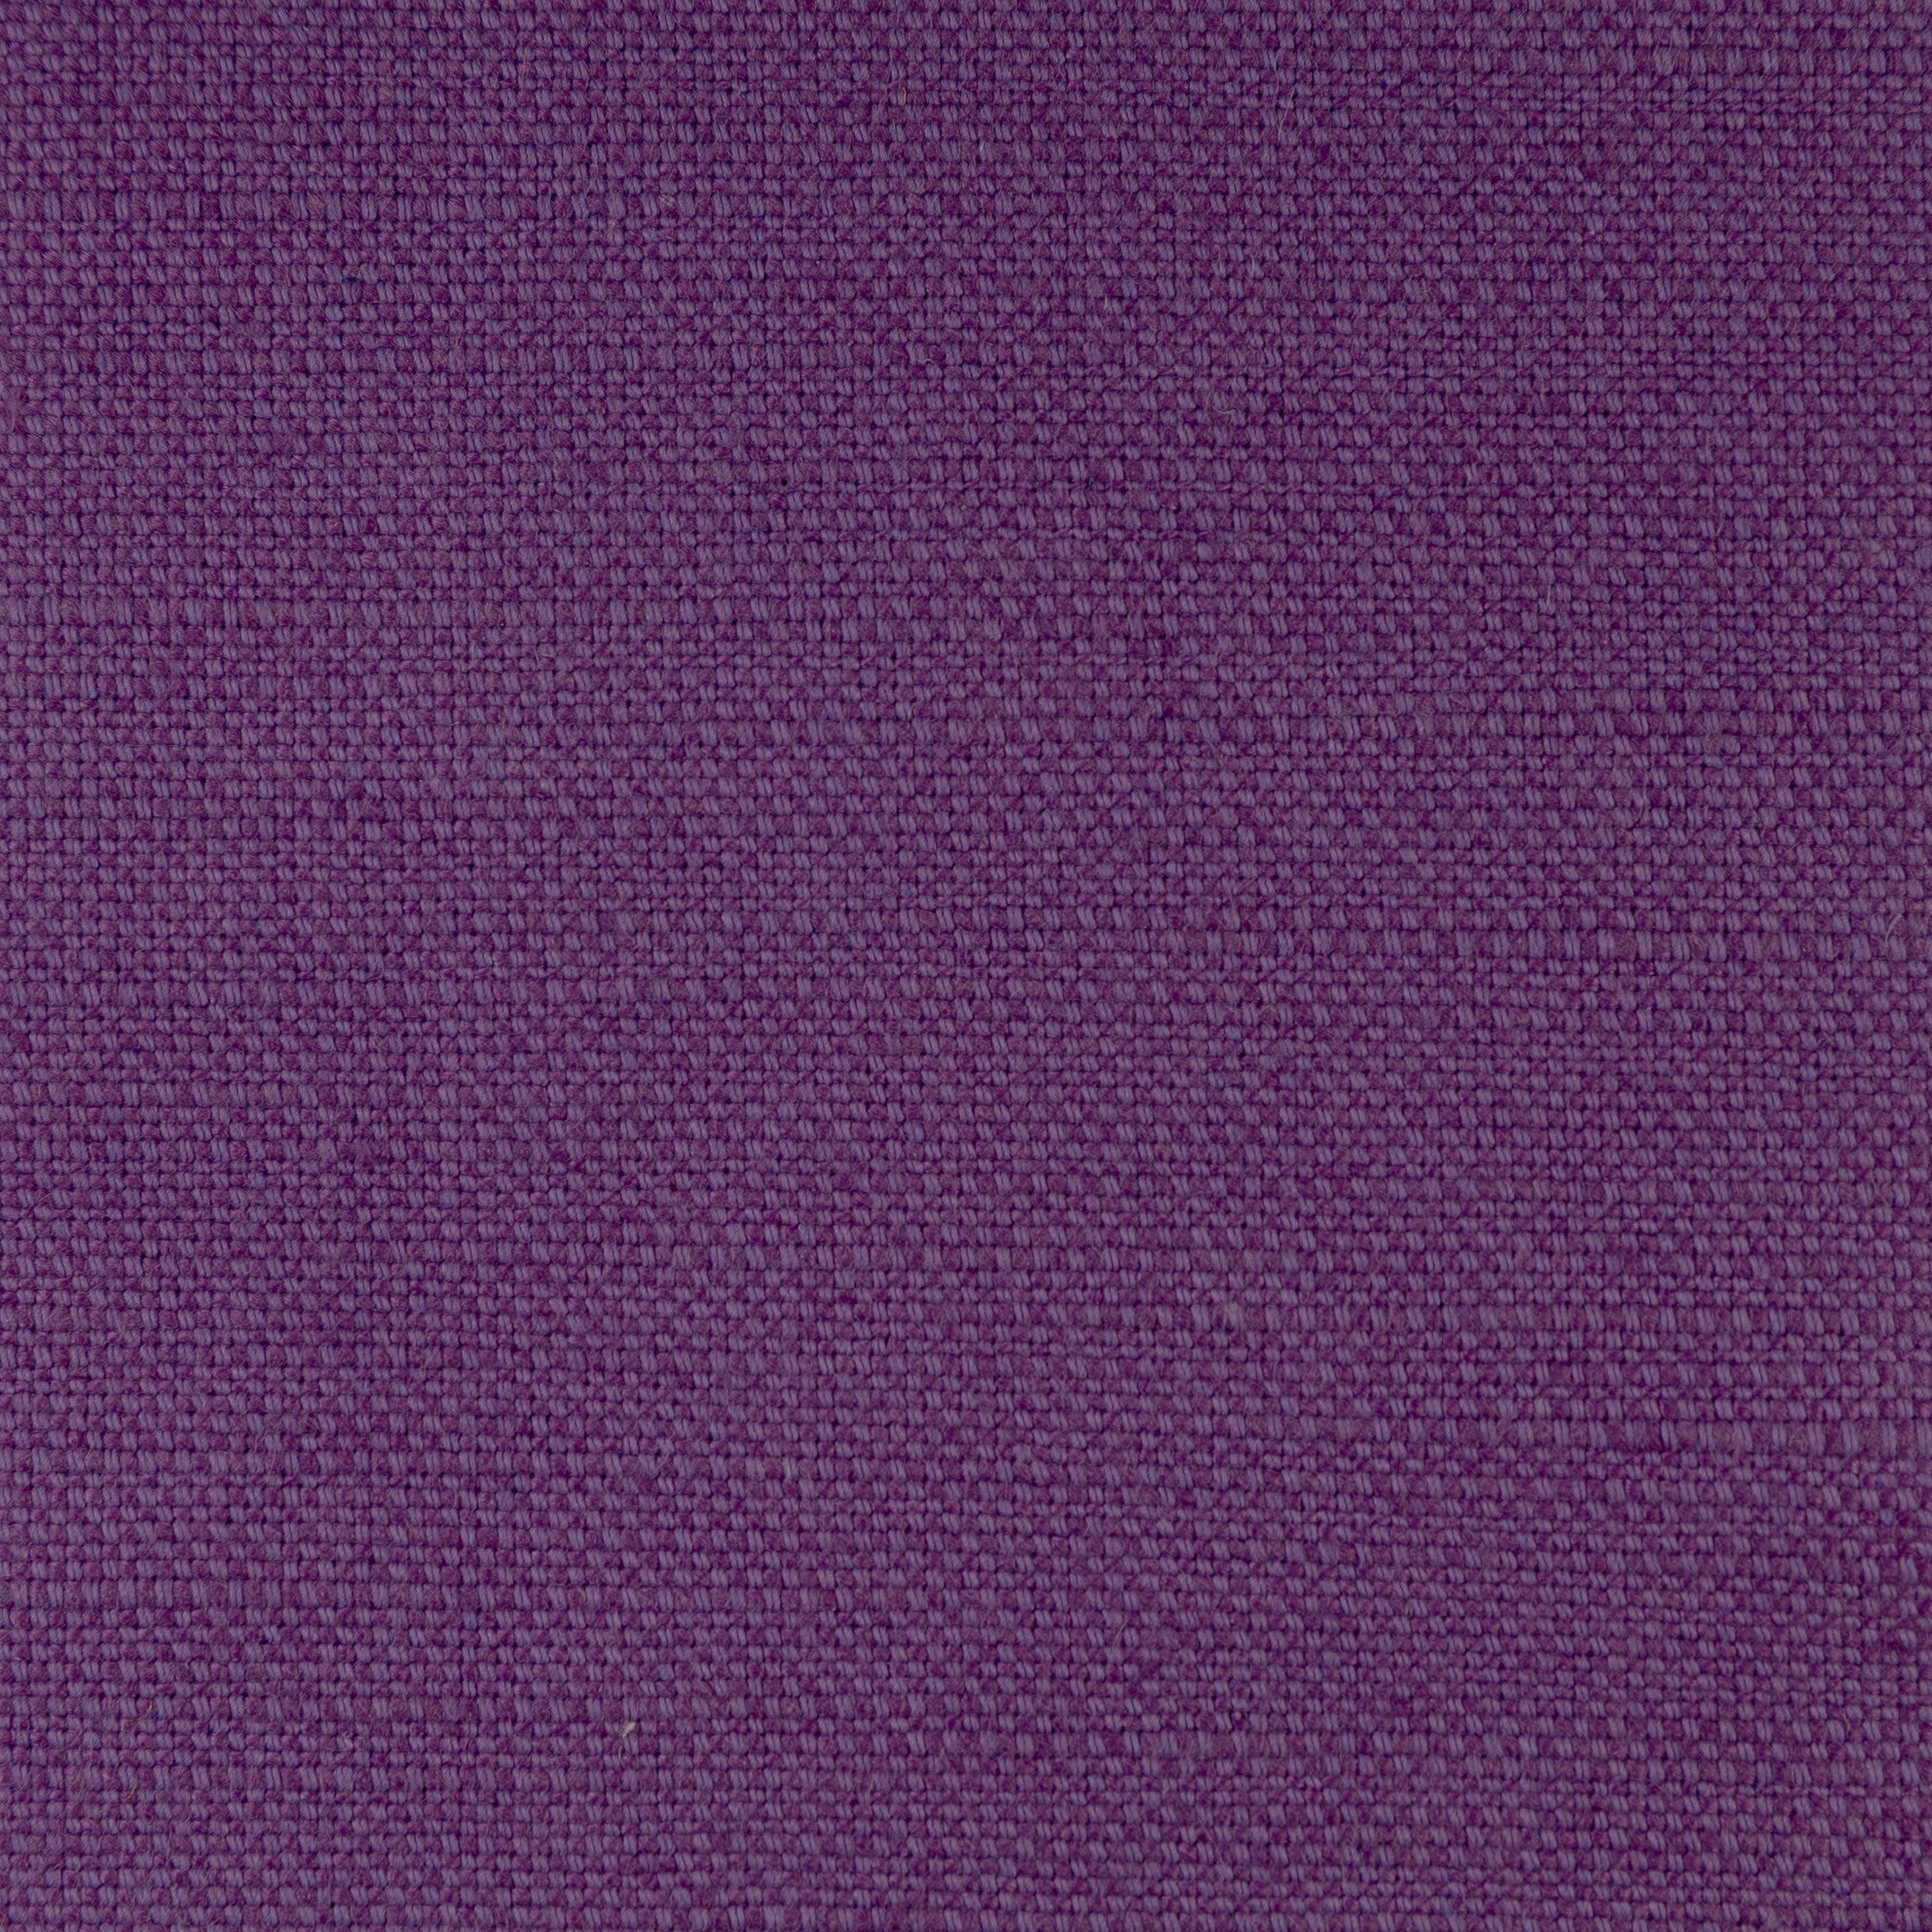 Woven Plain Fabric - Dunoon 17/028 Lilac Time | Nicholas Engert Interiors